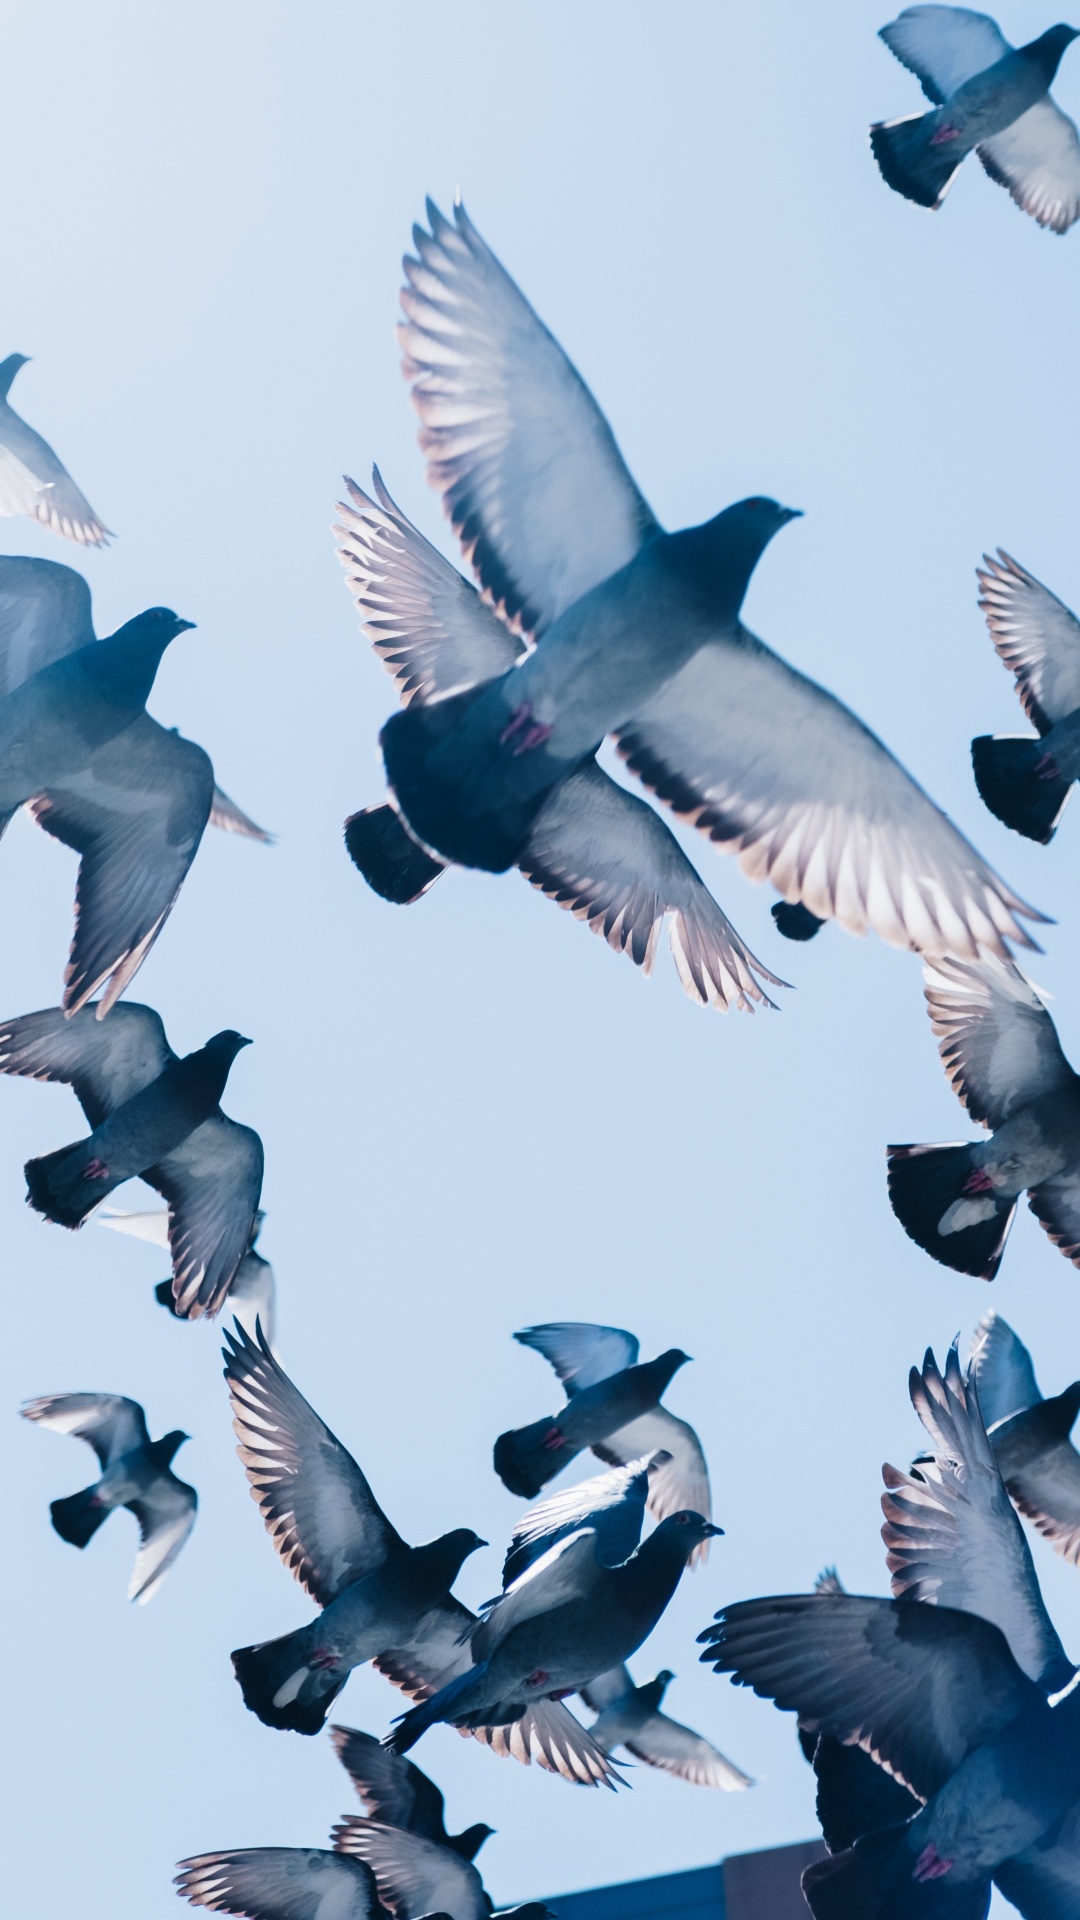 Flock of Birds Flying Under Blue Sky During Daytime. Wallpaper in 1080x1920 Resolution